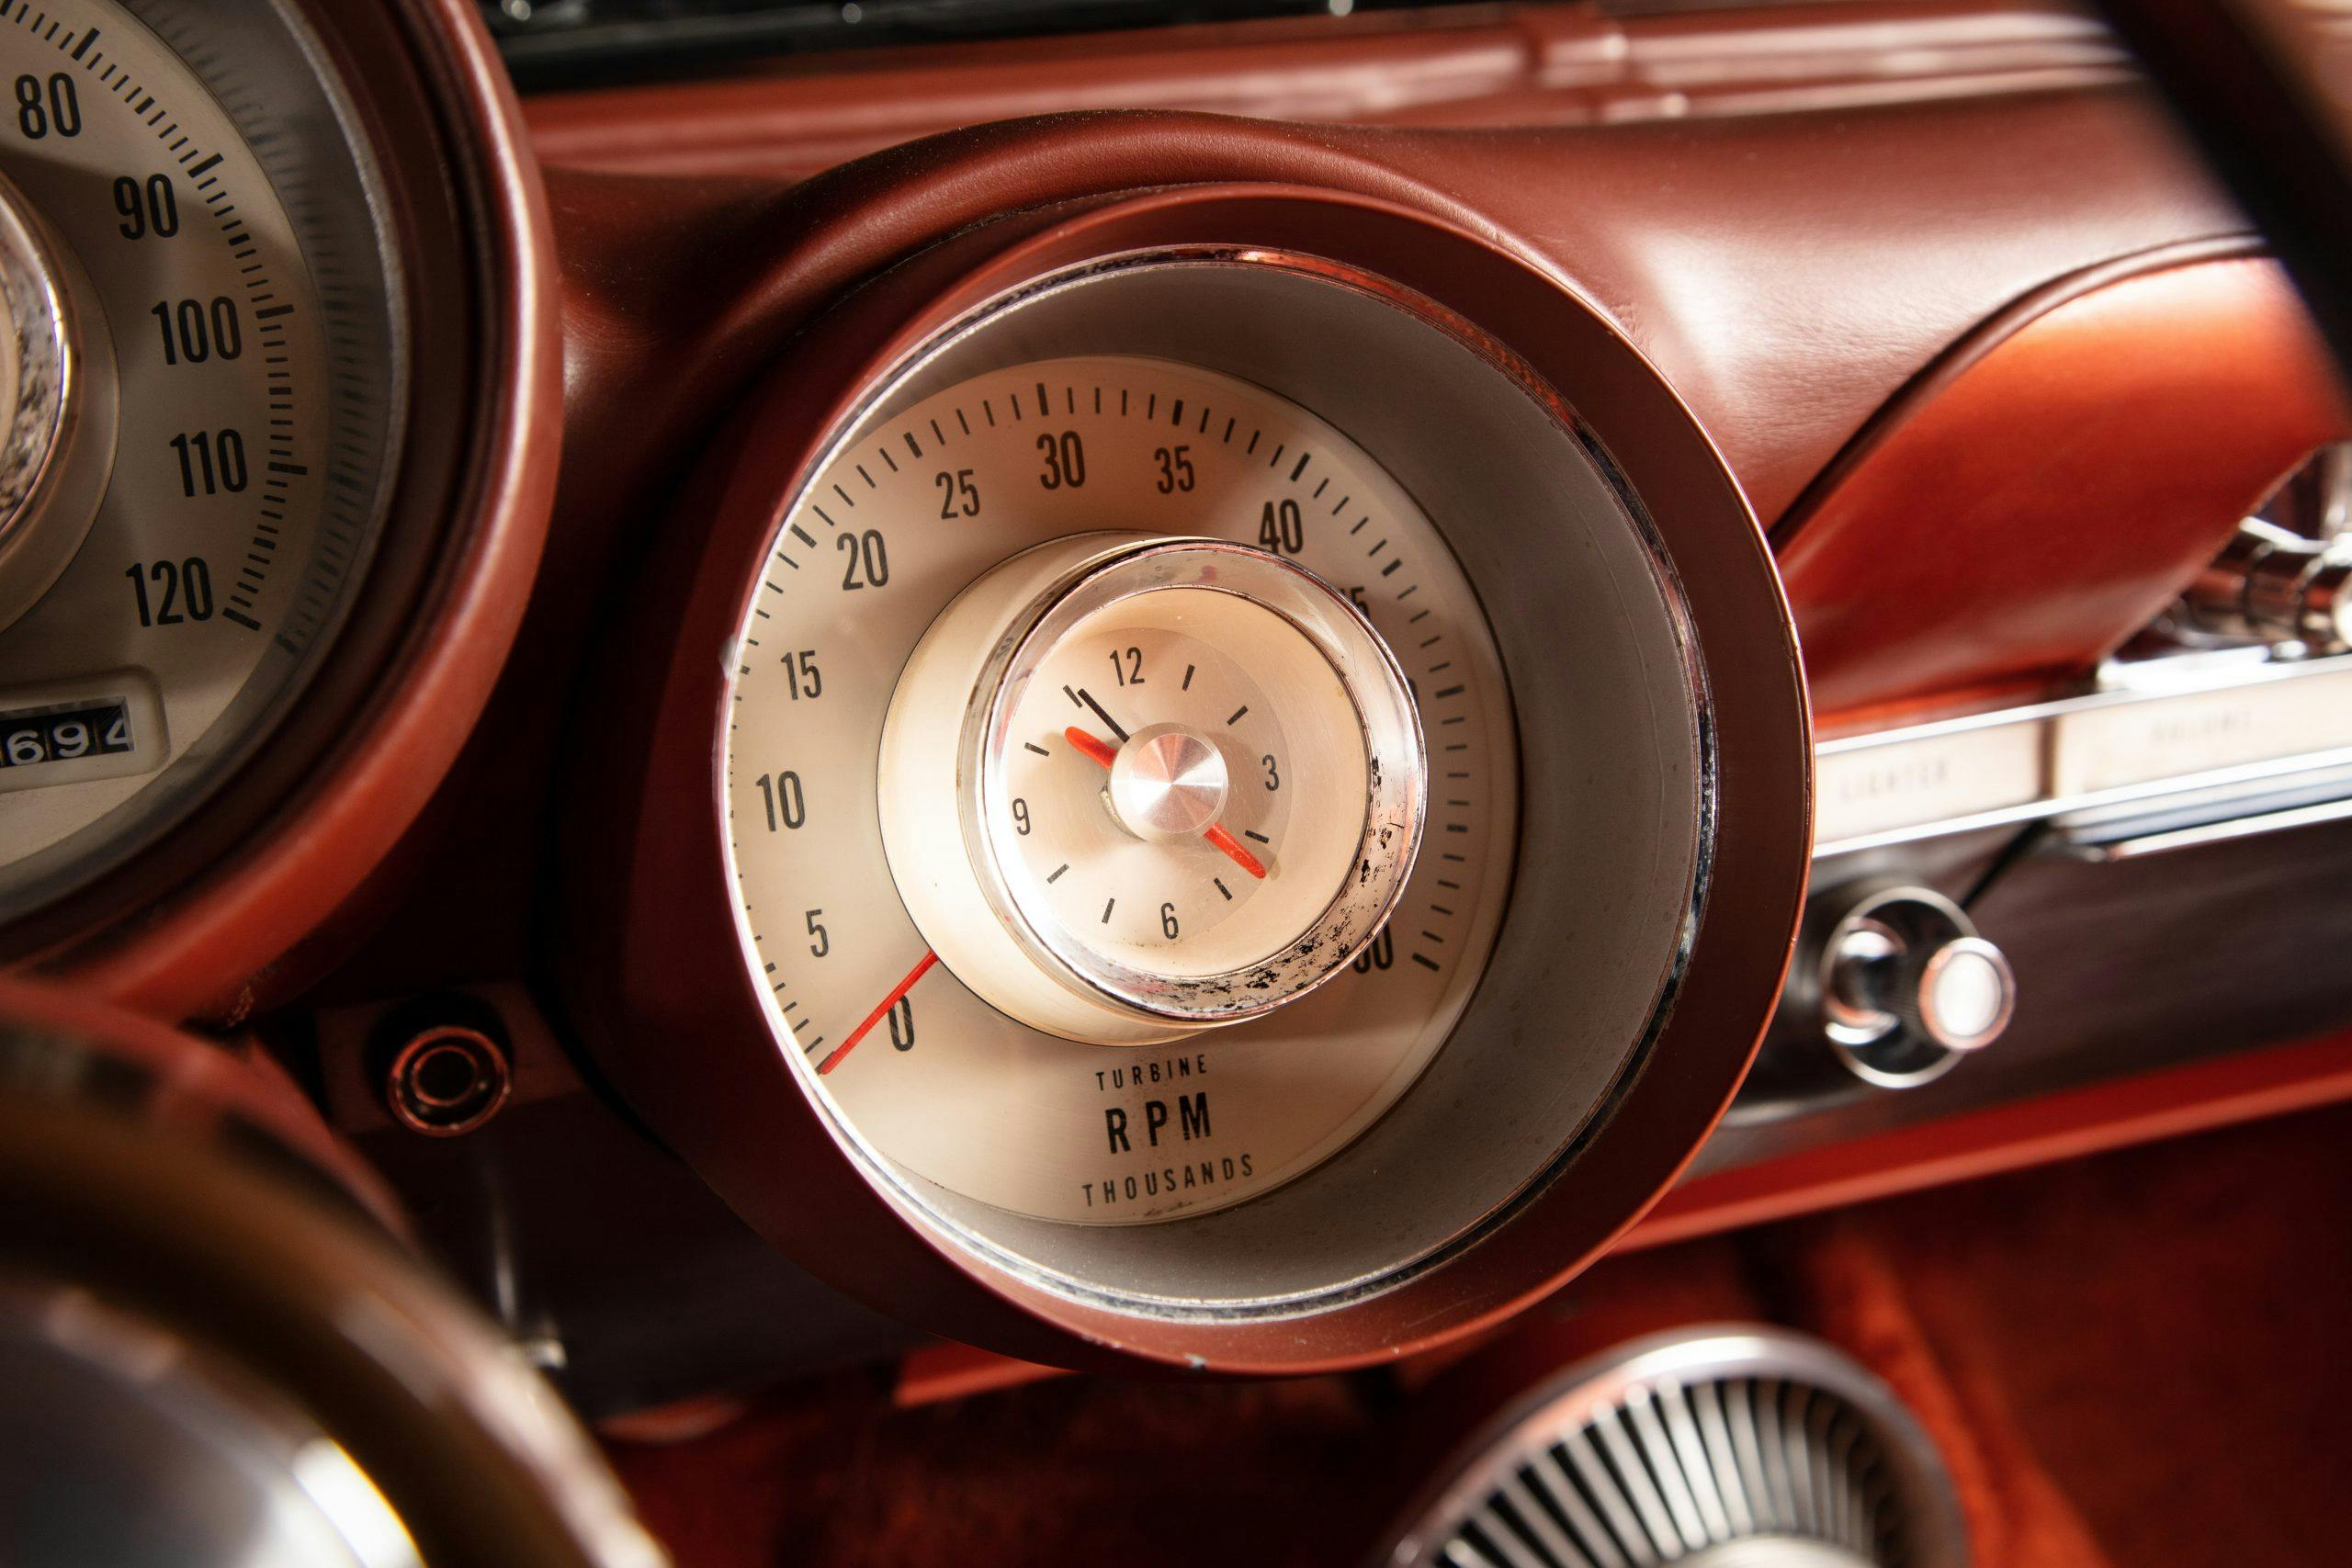 Chrysler Turbine car interior tachometer